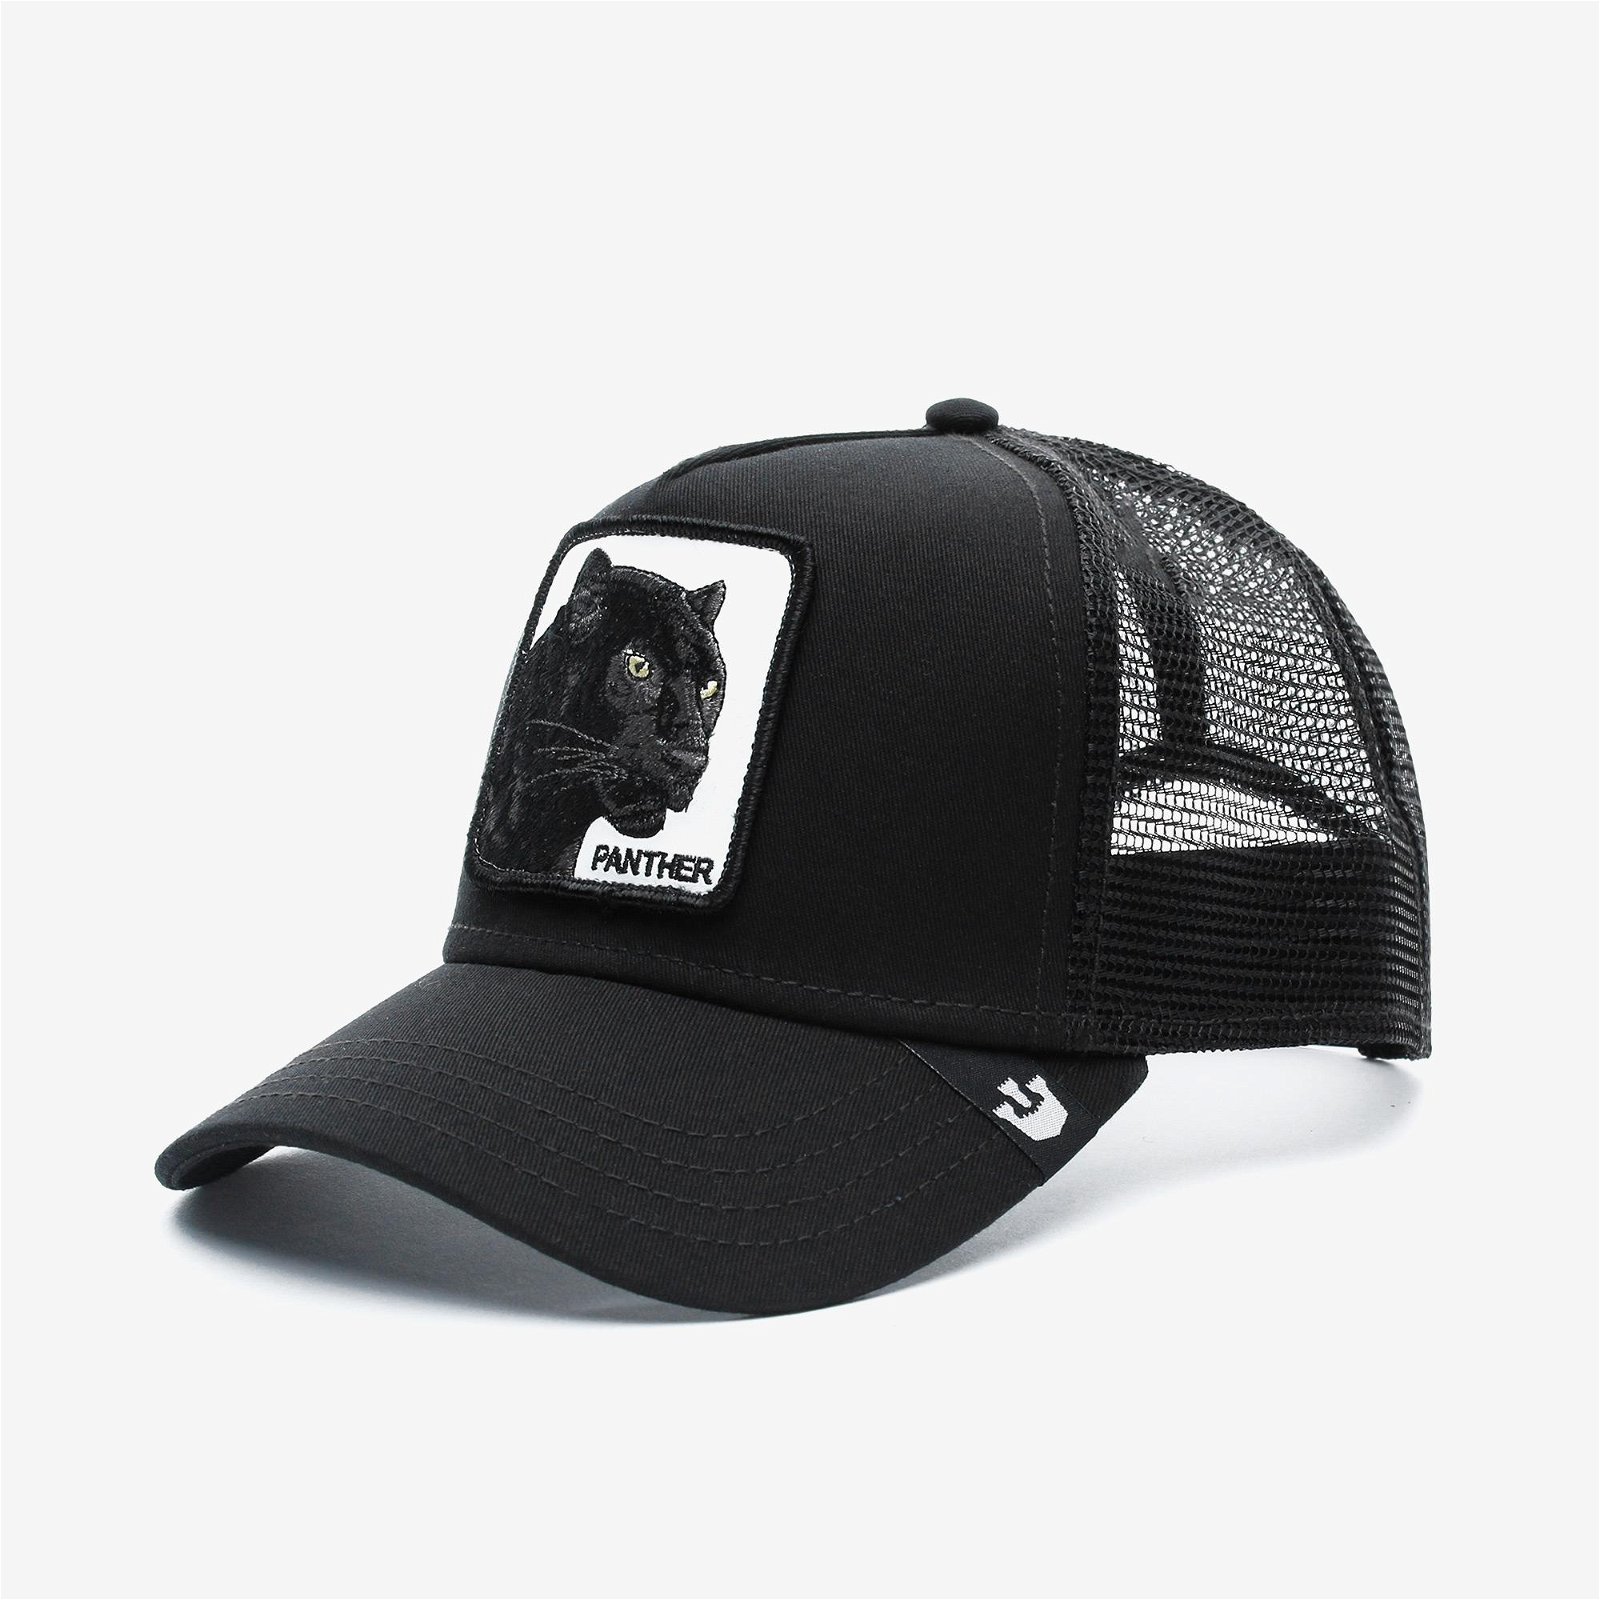 Goorin Bros Black Panther Siyah Şapka